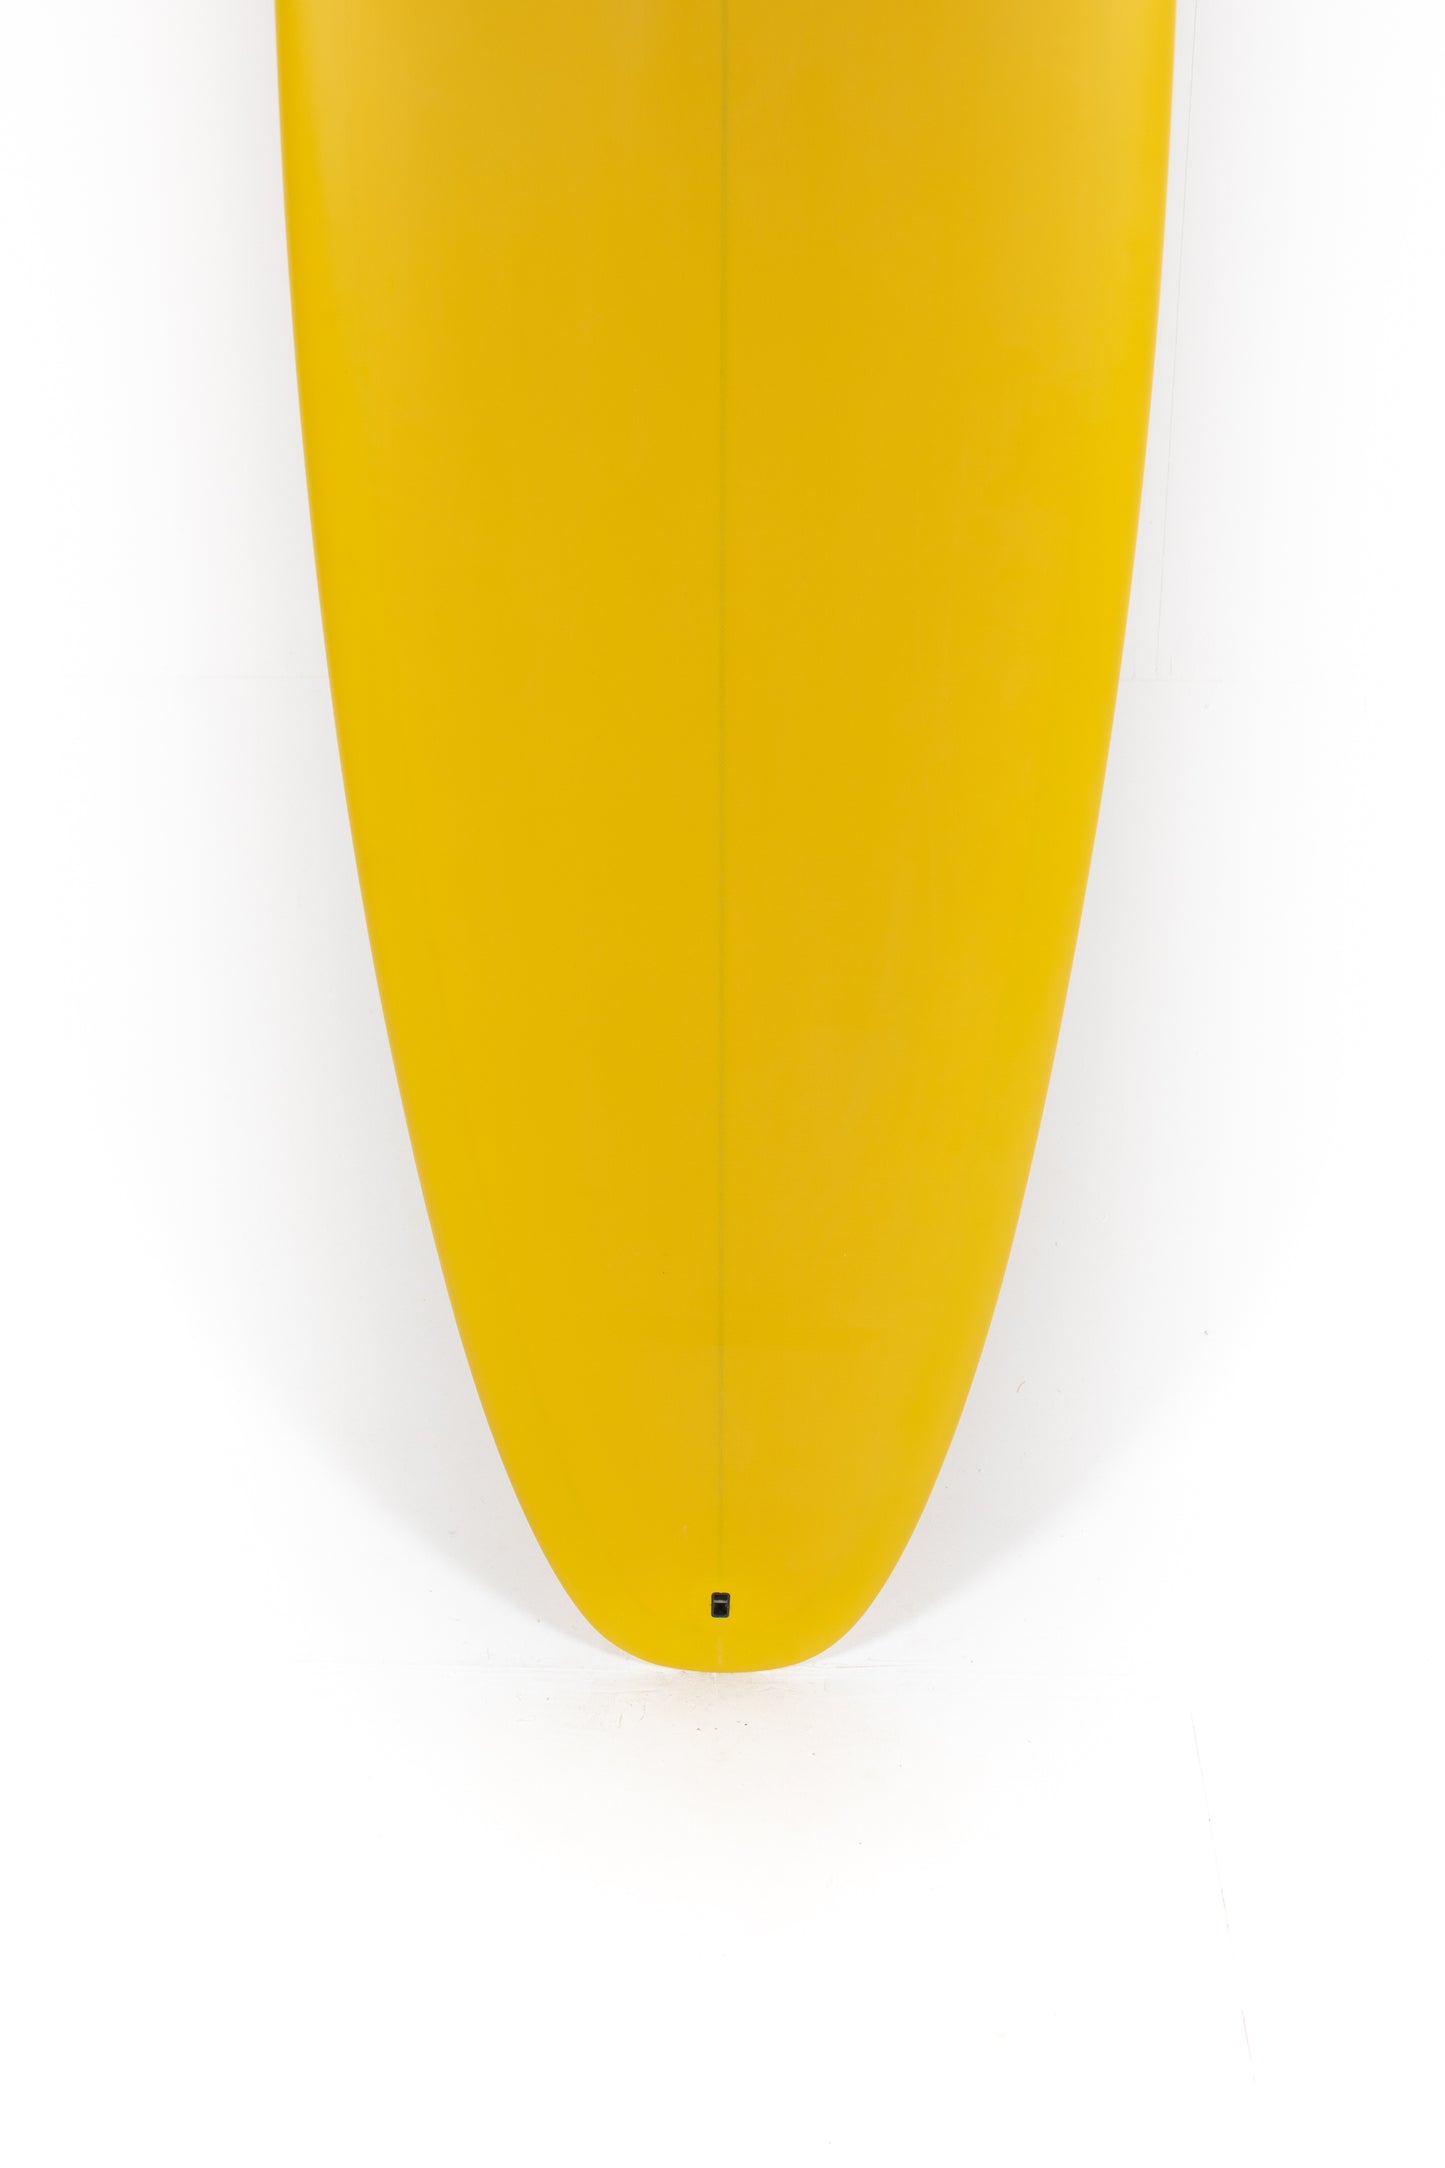 
                  
                    Pukas Surf shop - Christenson Surfboards - TWIN TRACKER - 6'6" x 21 x 2 11/16 - CX04748
                  
                